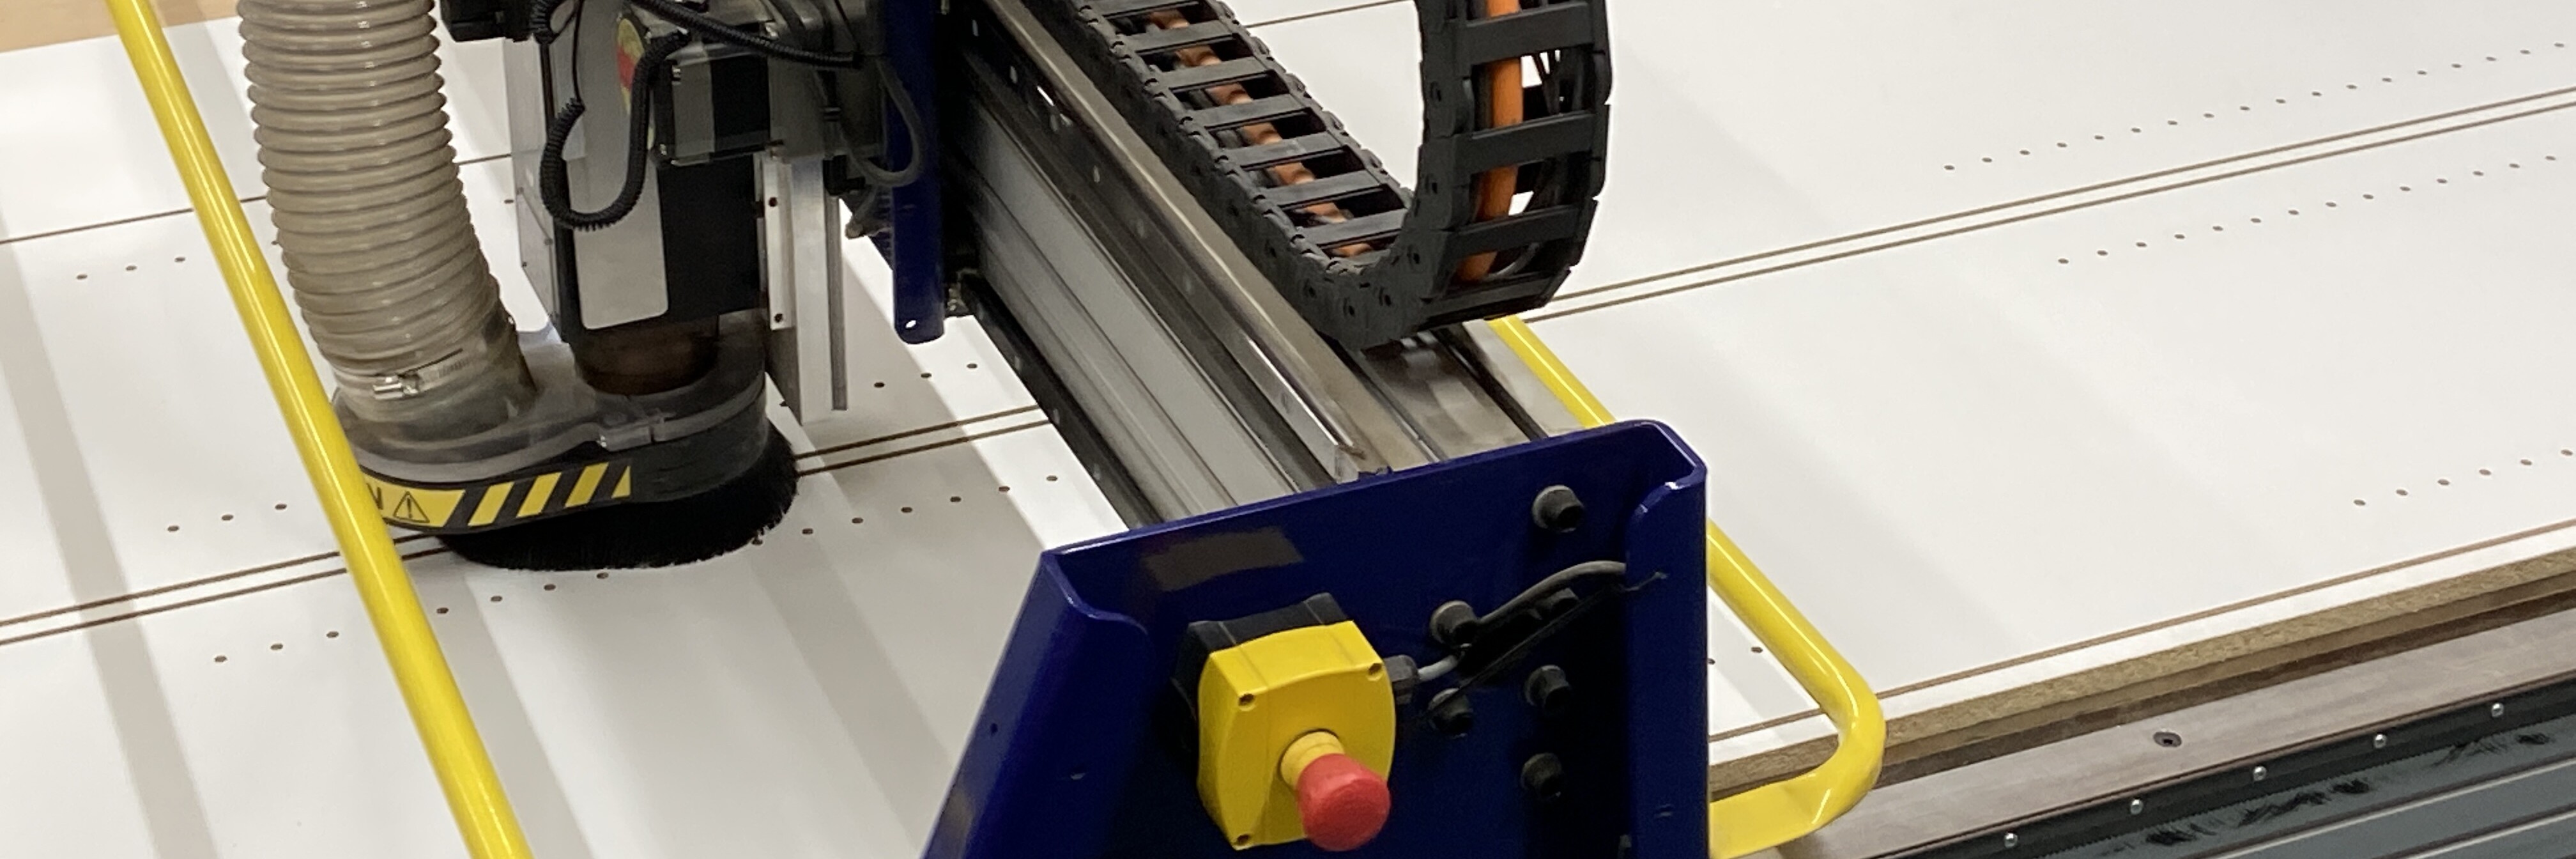 machine printing and cutting on wood